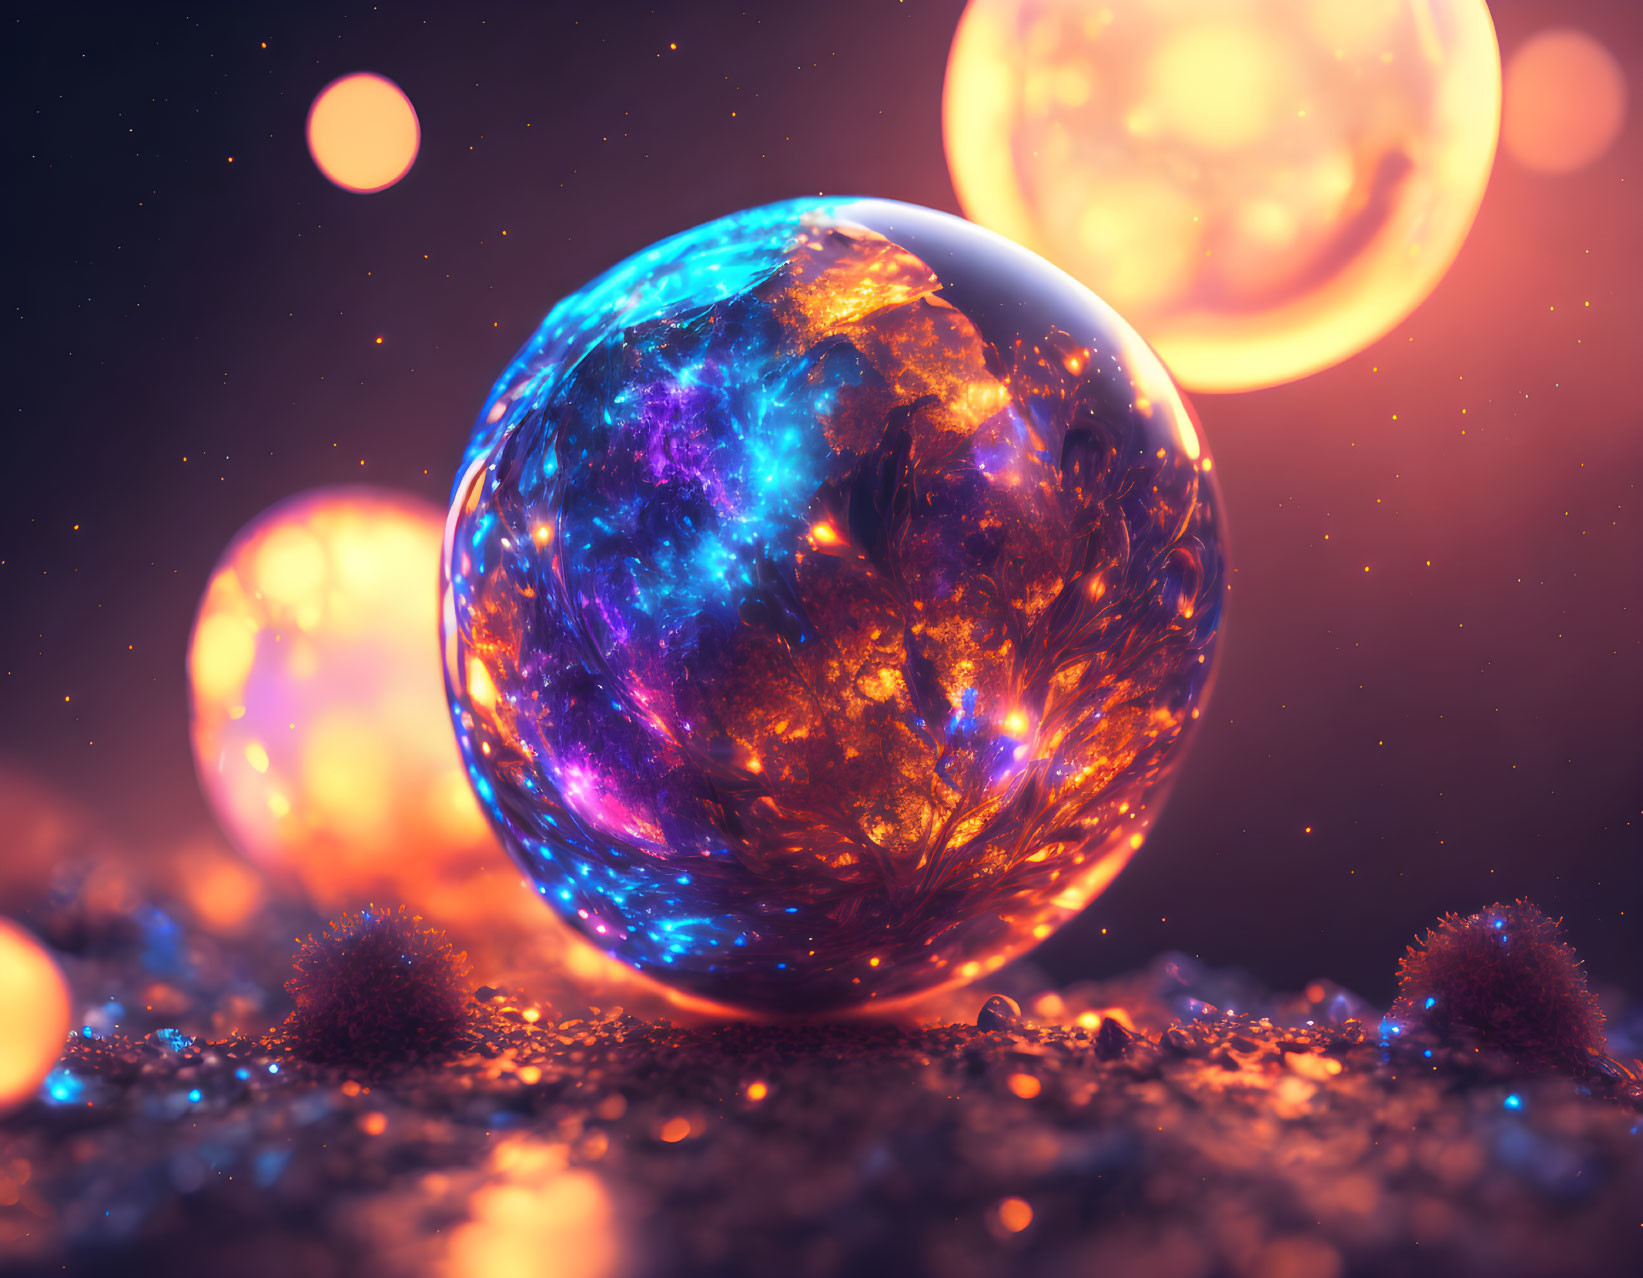 Glowing iridescent spheres in cosmic nebula setting